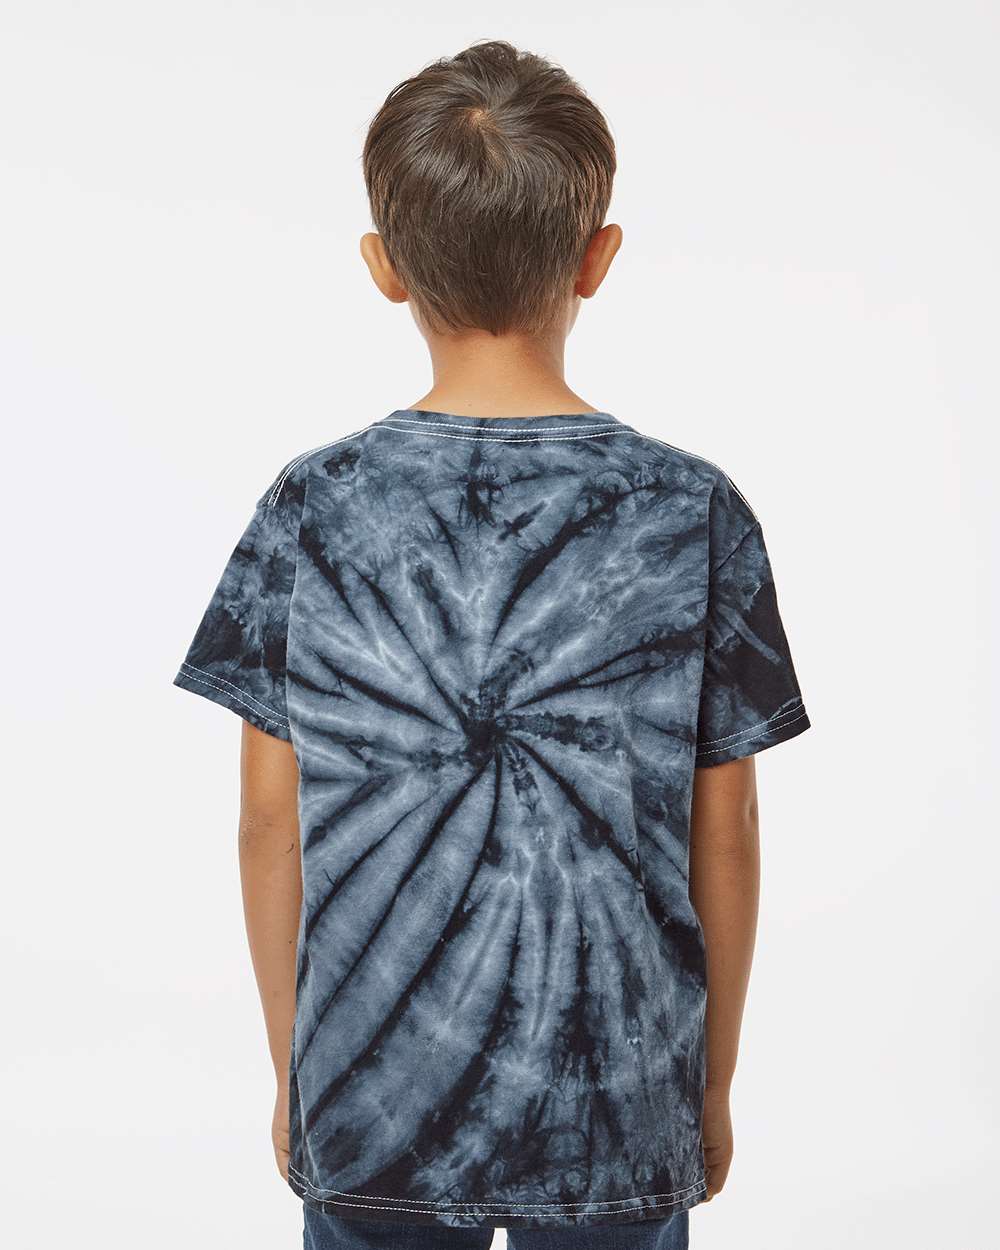 Dyenomite 20BCY - Youth Cyclone Pinwheel Tie-Dyed T-Shirt